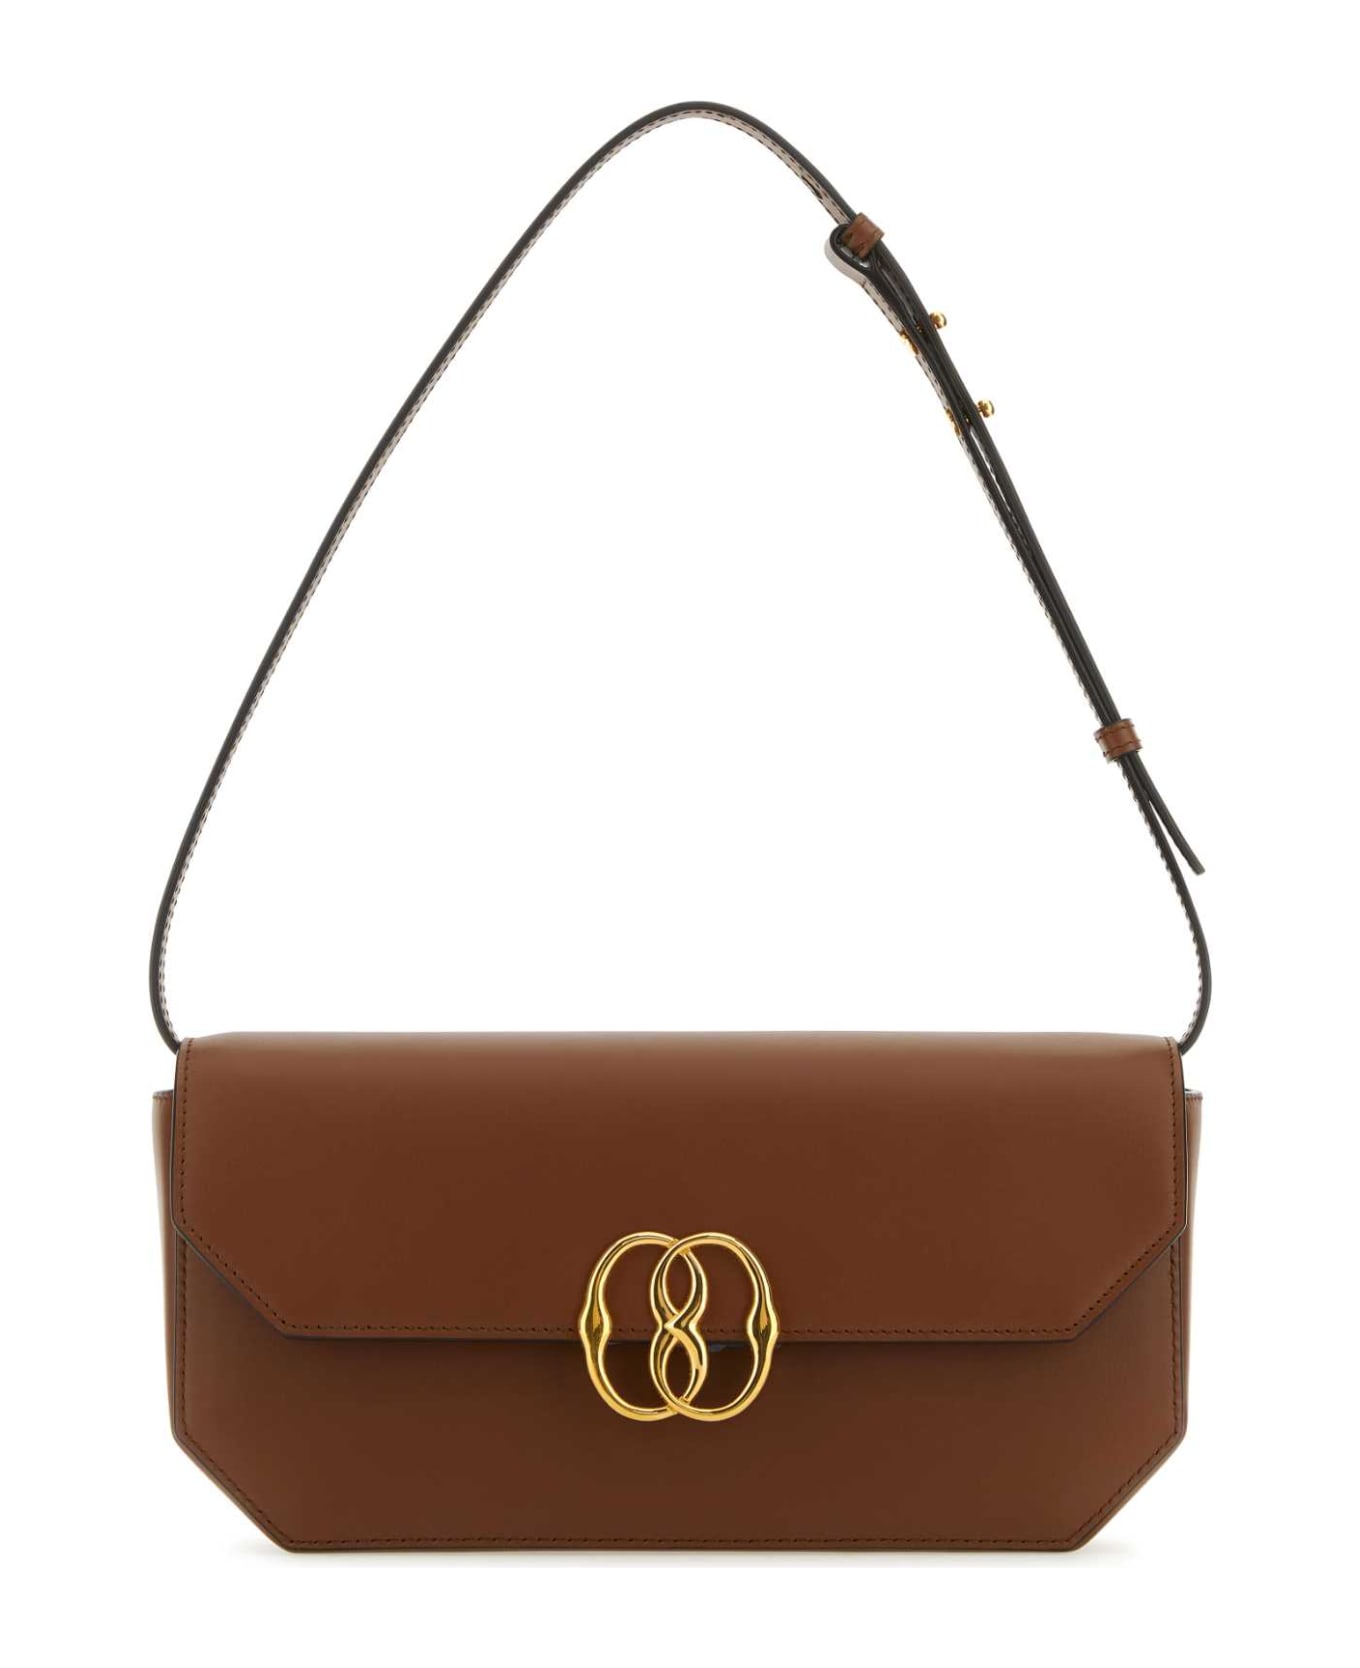 Bally Brown Leather Emblem Shoulder Bag - CUERO21OROVIBRATO